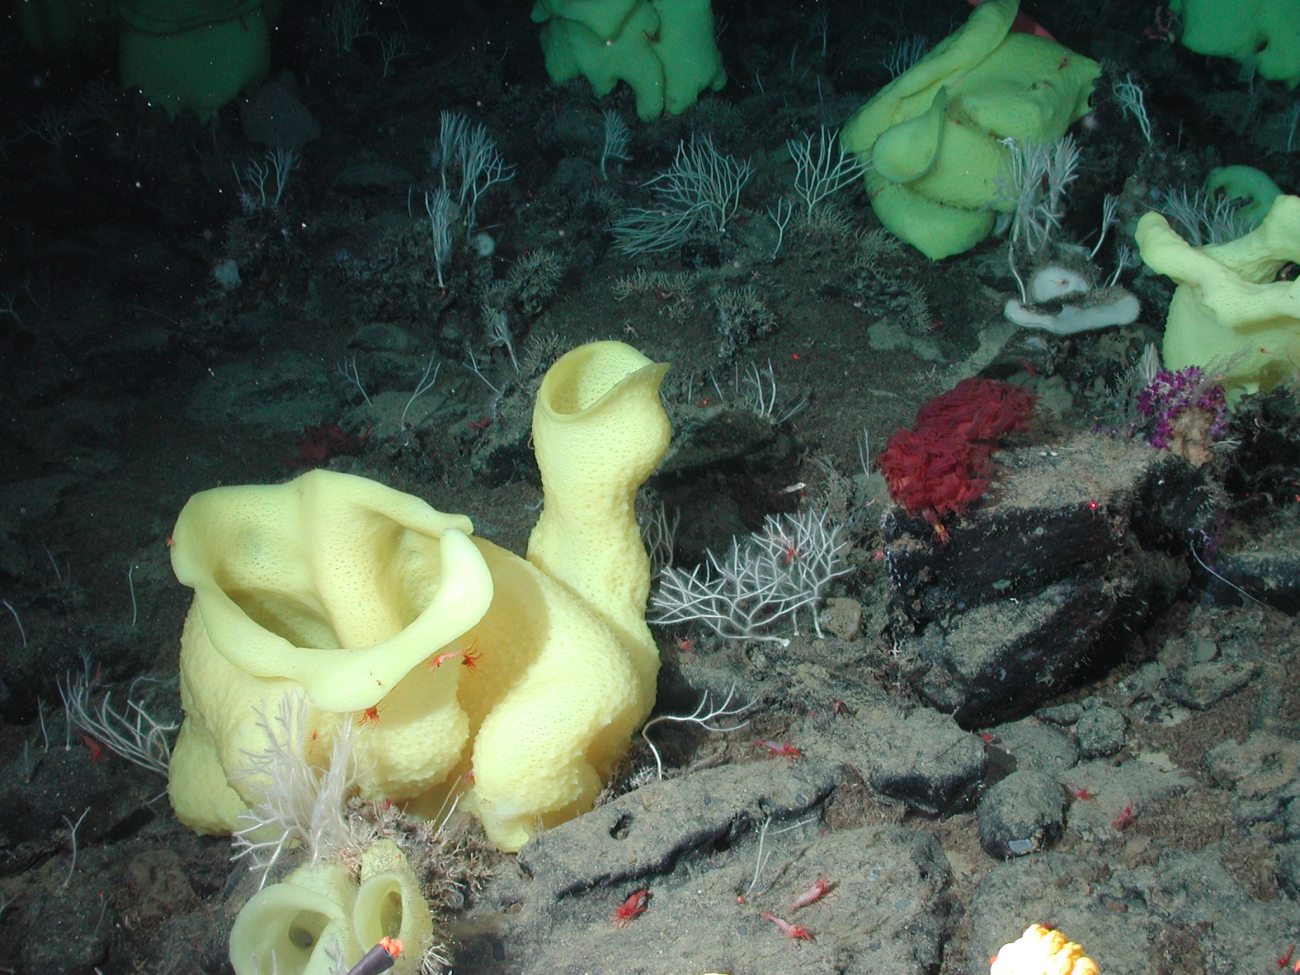 Yellow picasso sponge and reddish mushroom coral